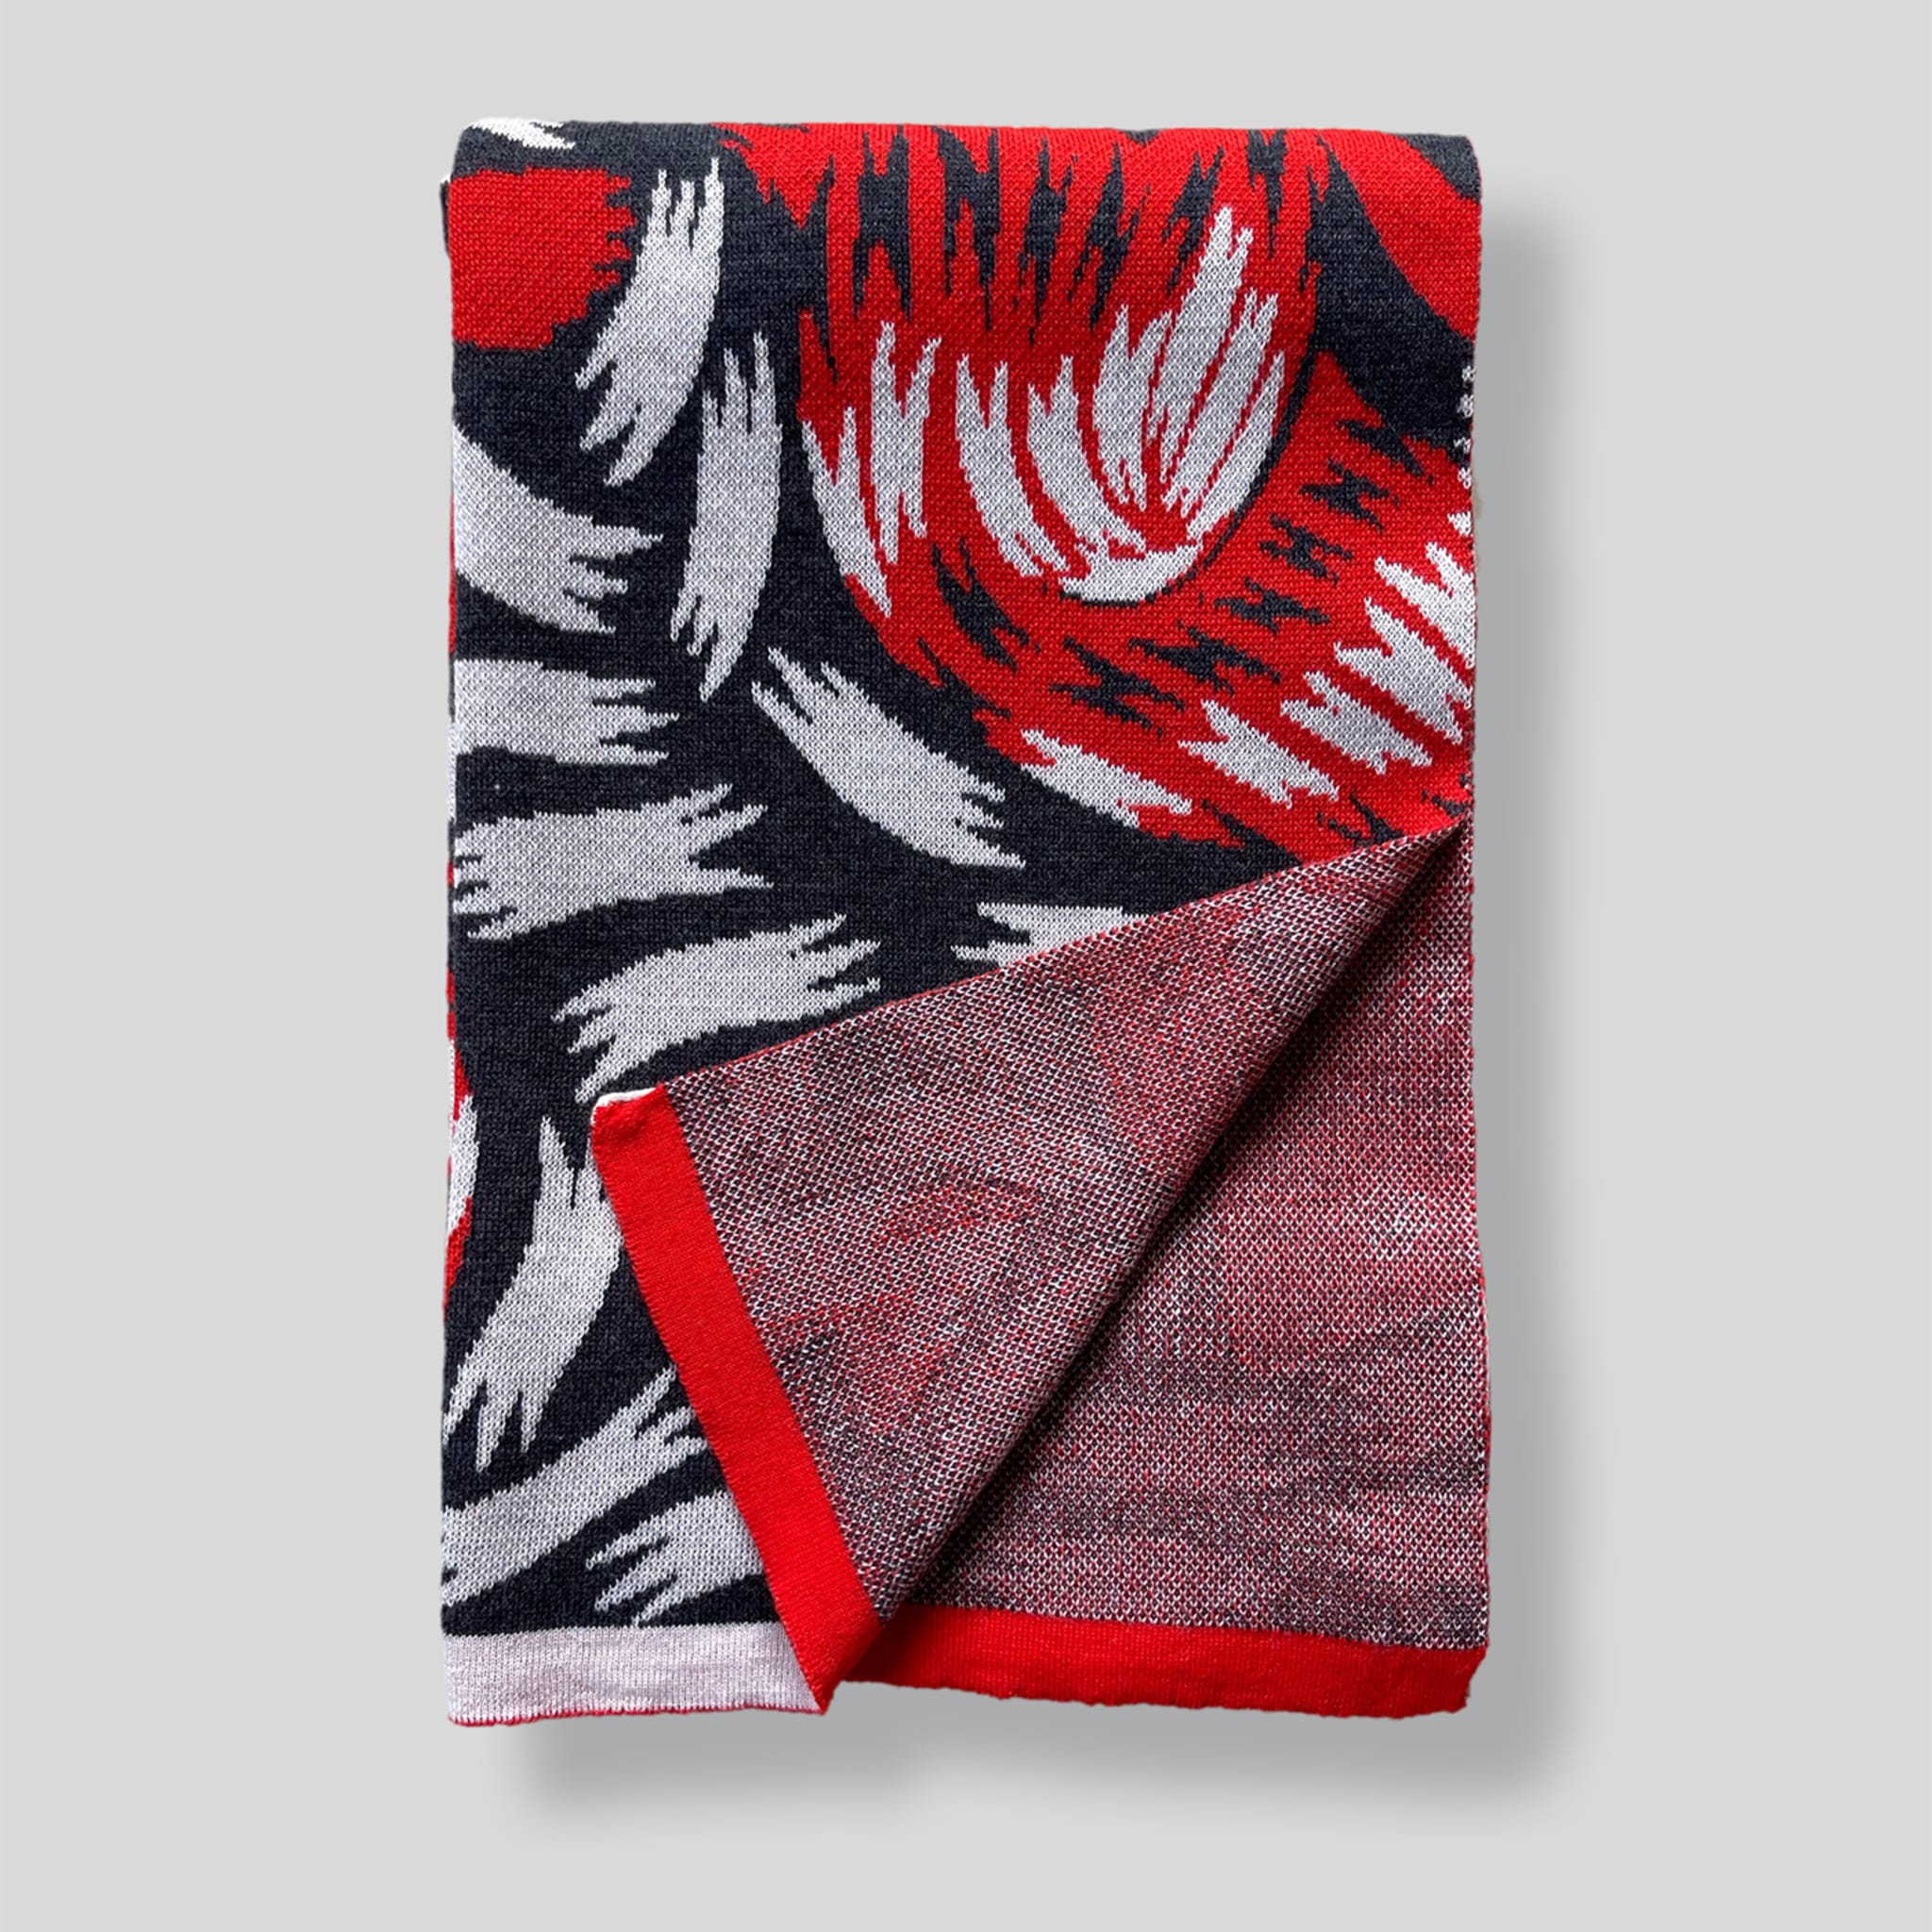 Zing Polychrome Blanket by Hanna Werning - Alternative view 1